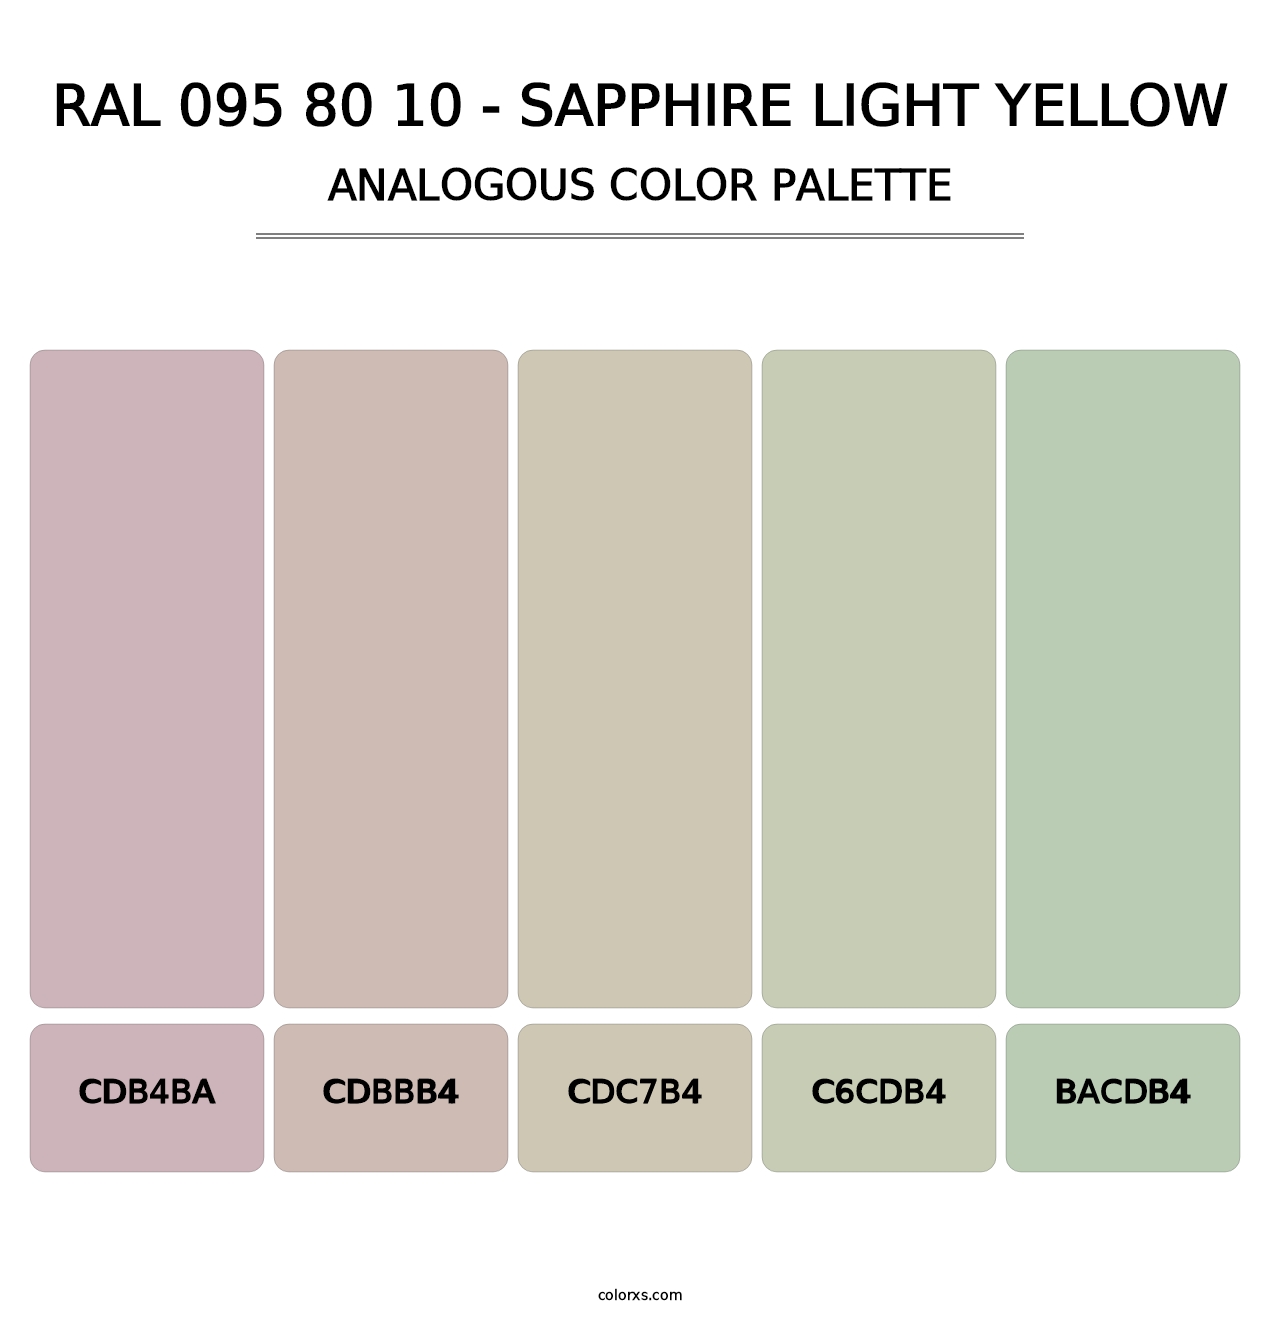 RAL 095 80 10 - Sapphire Light Yellow - Analogous Color Palette